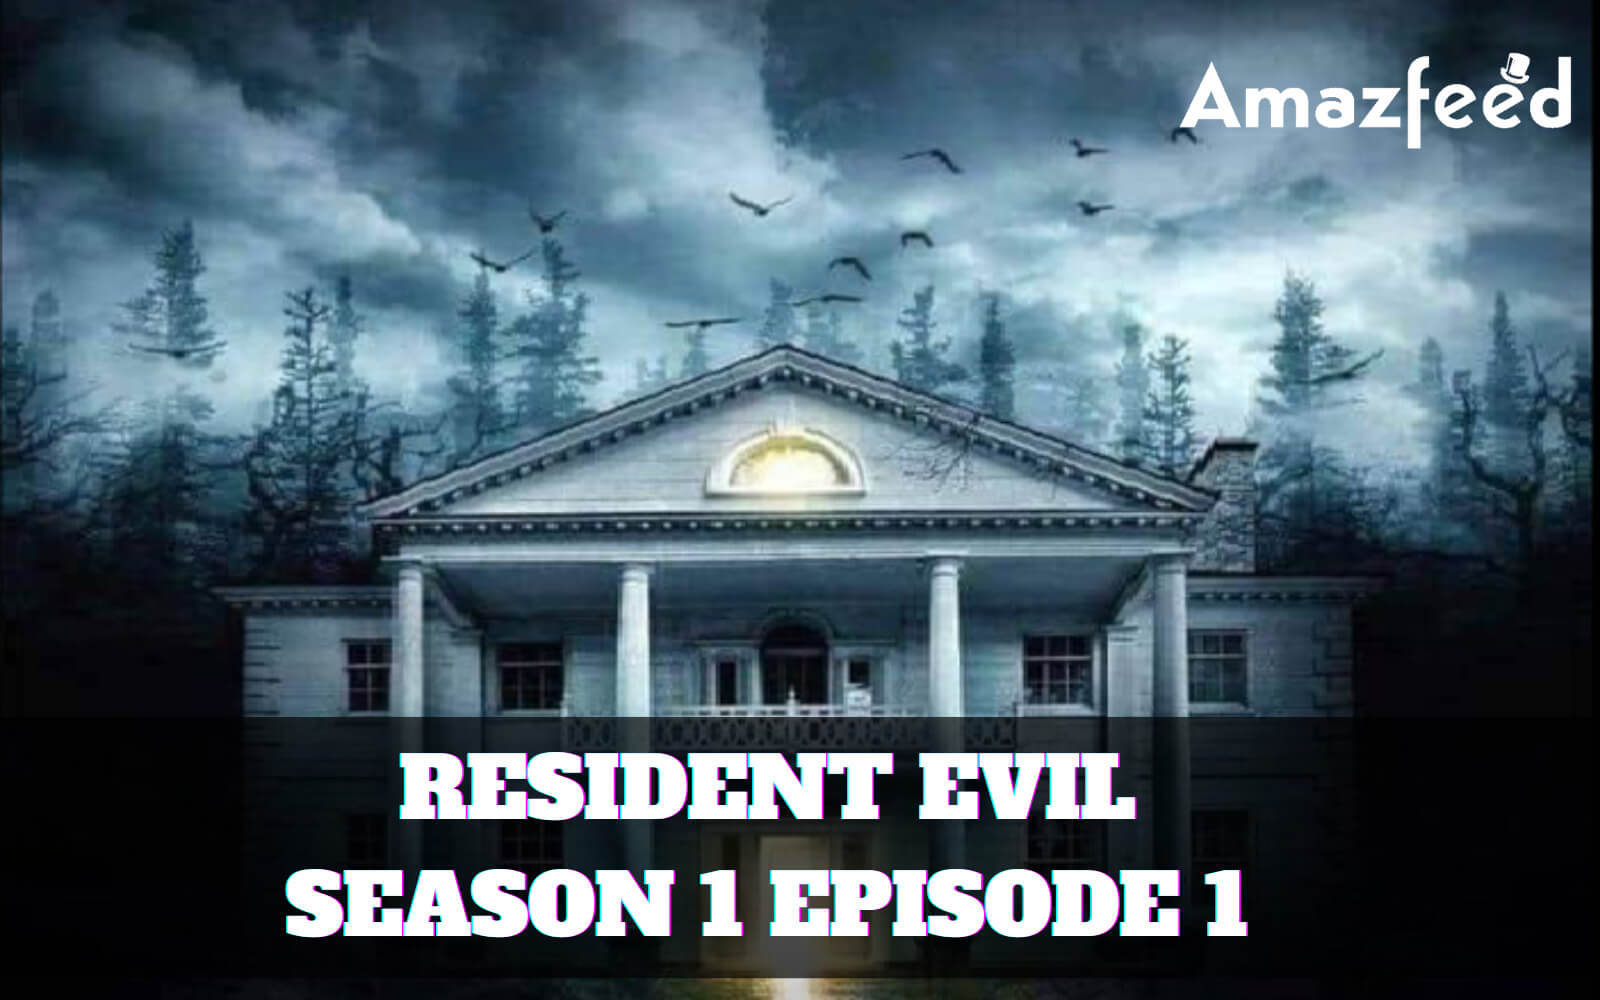 Resident Evil Season 1 episode 1 release date